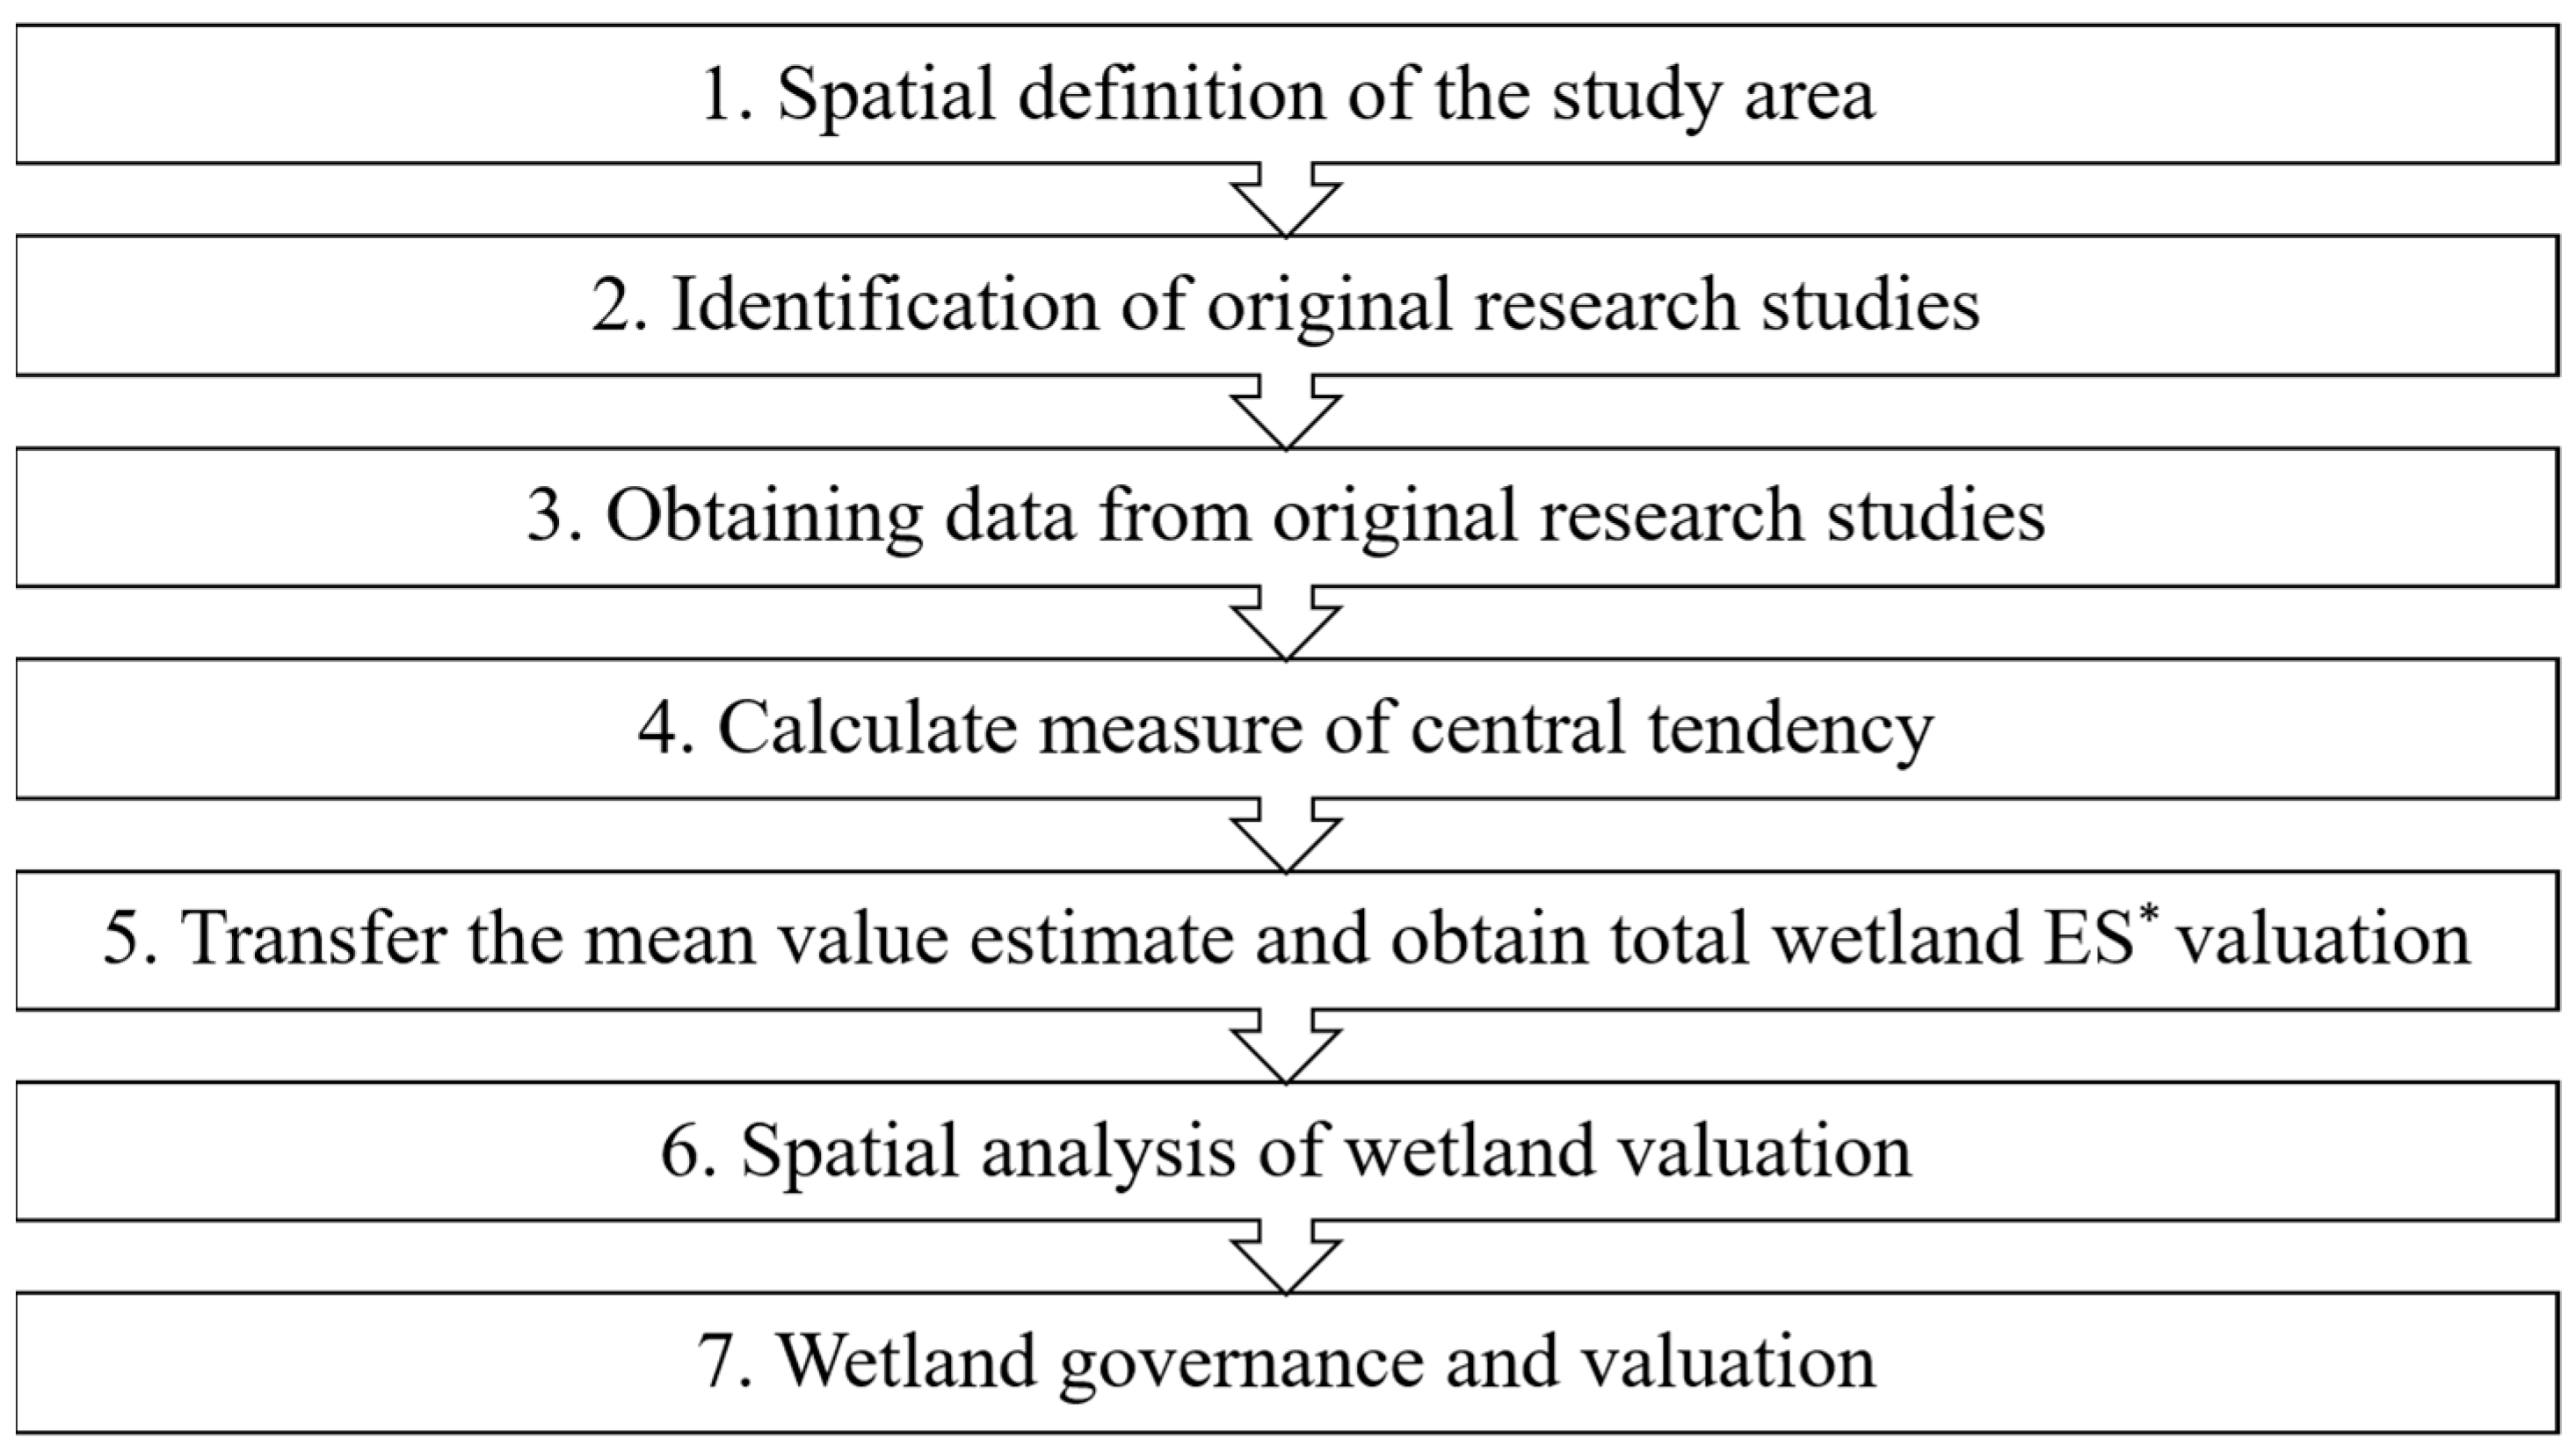 PDF) Ecosystem service value assessment for constructed wetlands